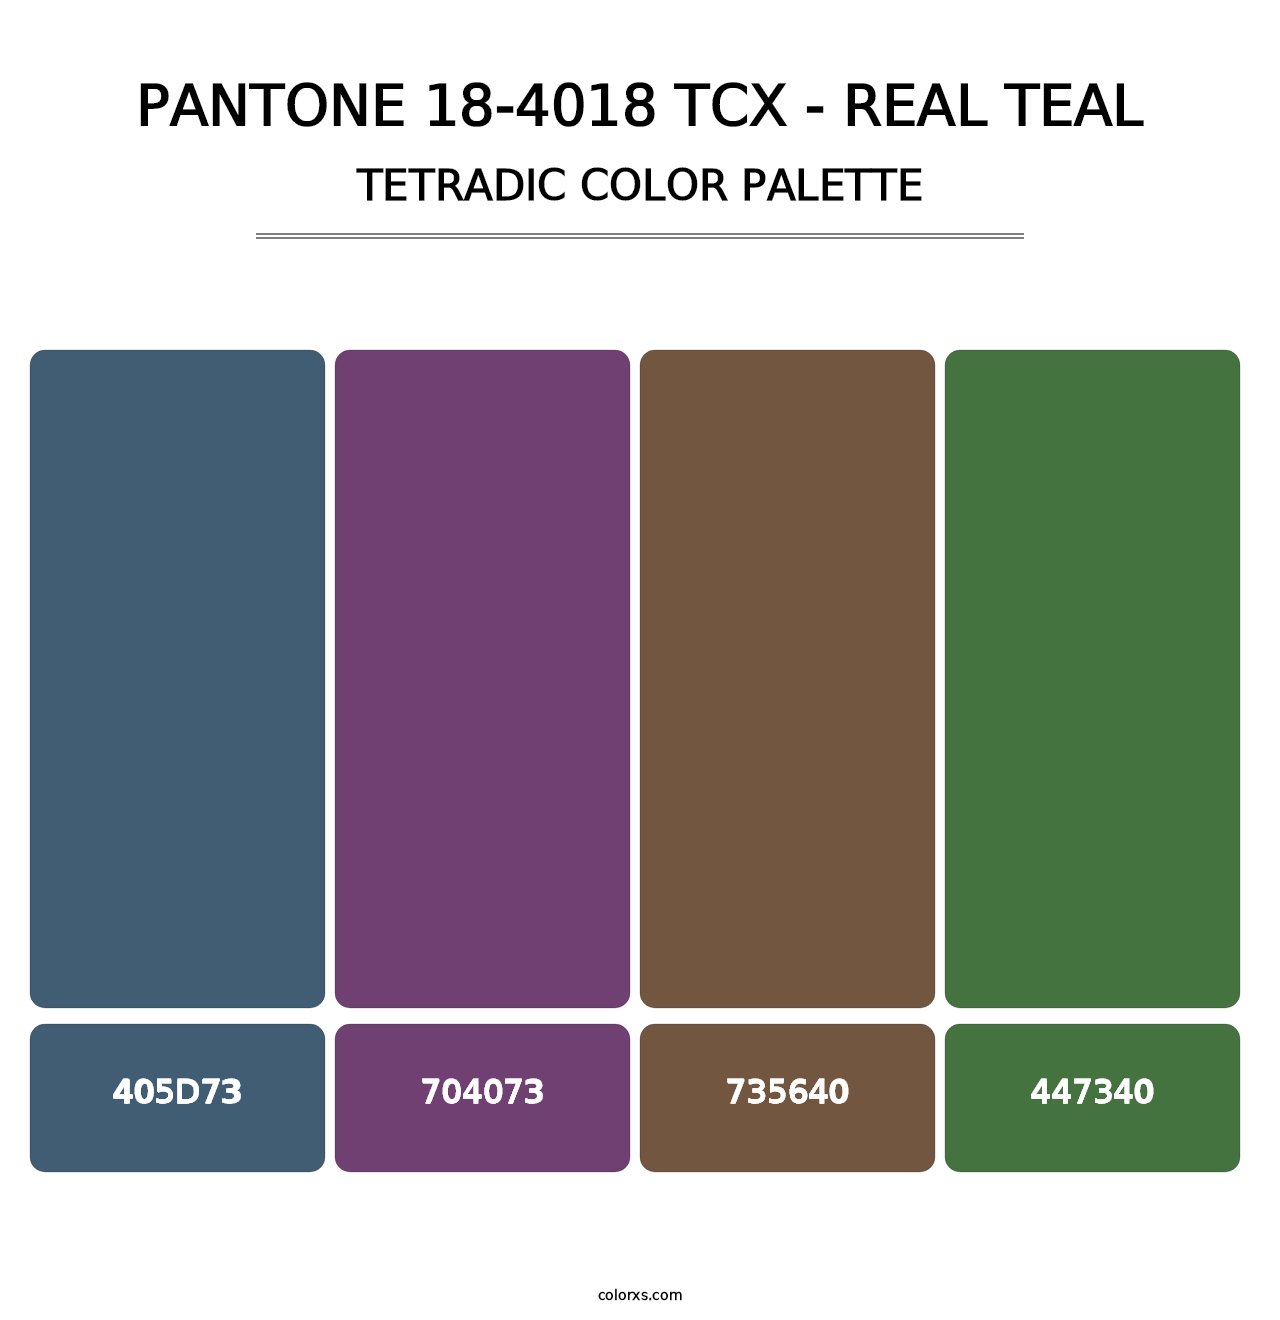 PANTONE 18-4018 TCX - Real Teal - Tetradic Color Palette